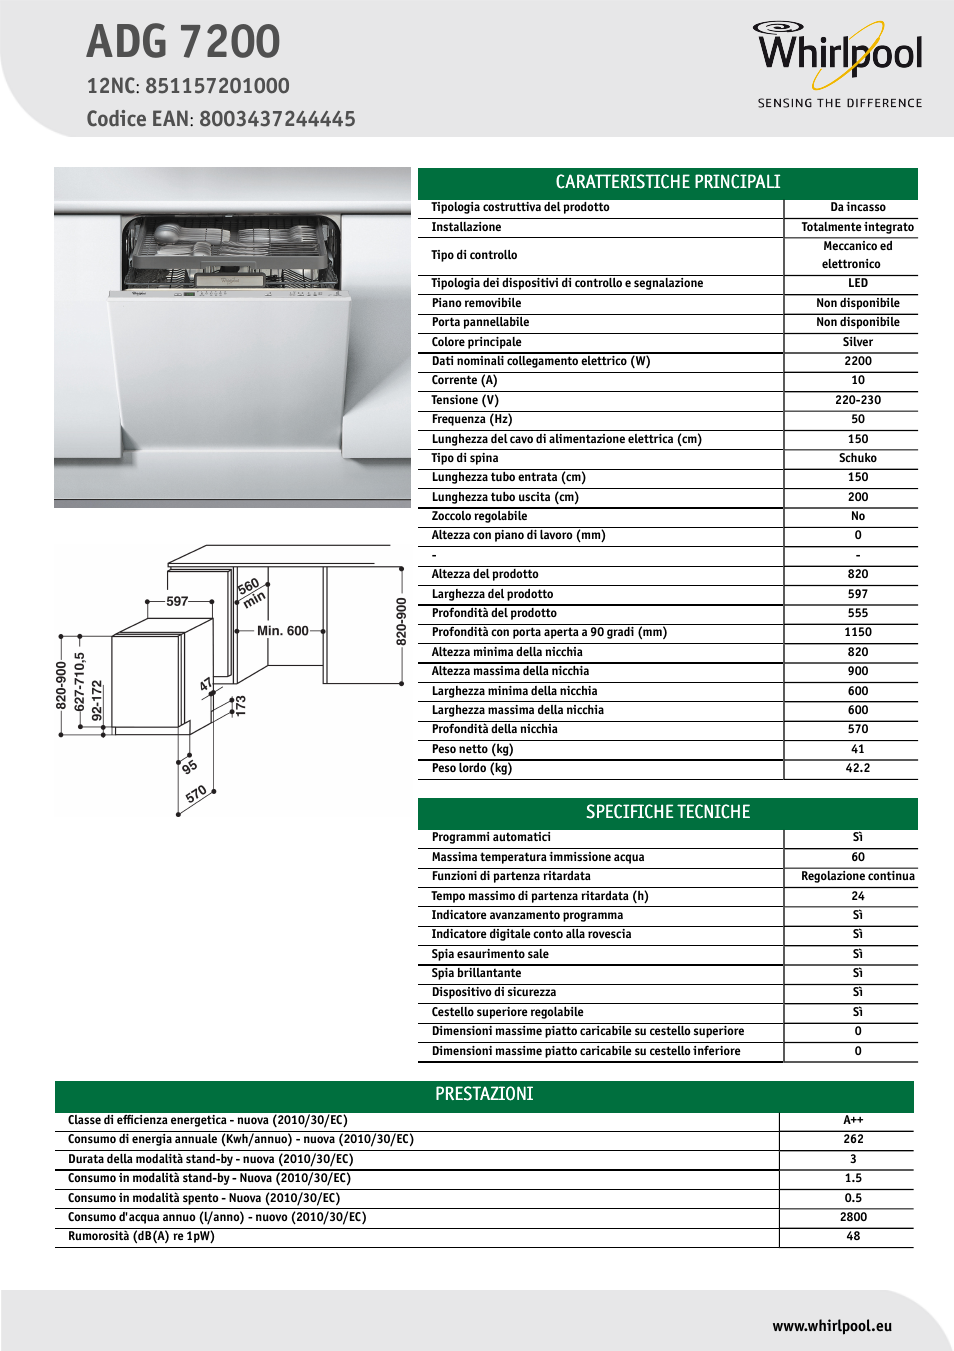 Whirlpool ADG 7200 Manuale d'uso | Pagine: 1